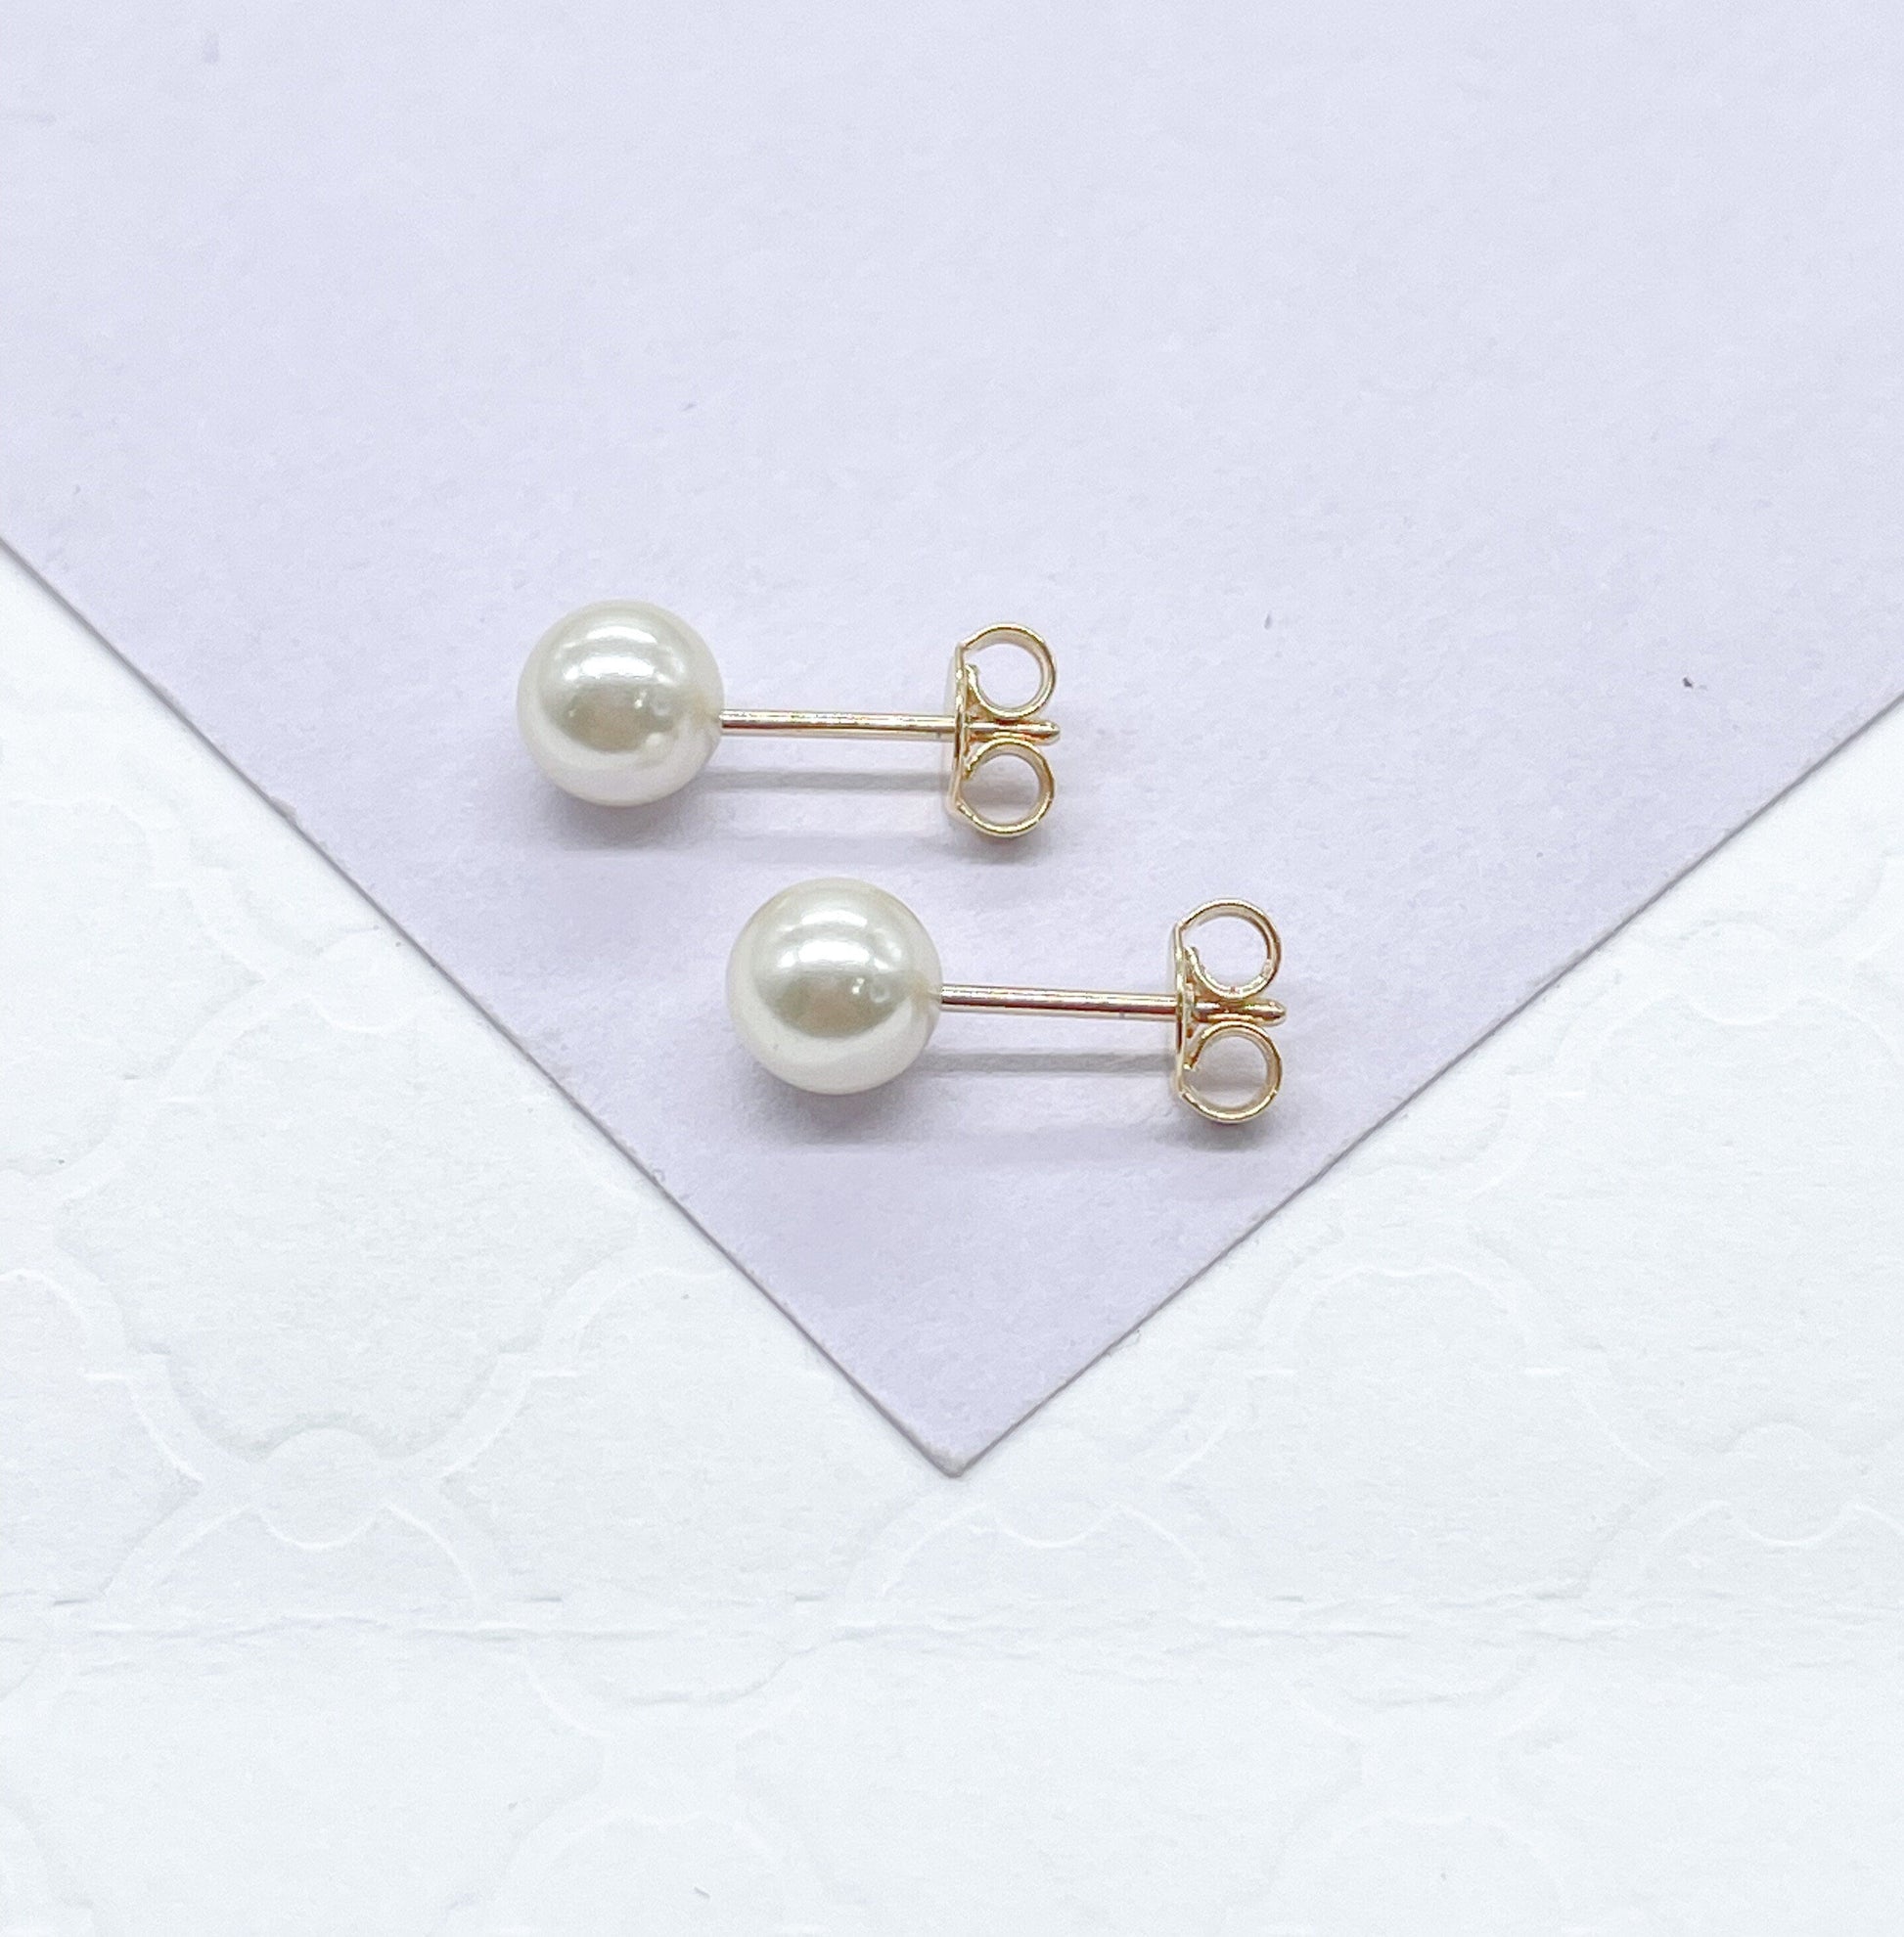 18k Gold Filled Plain Simulated Pearl Stud Earrings Jewelry Making Supplies, Dainty Studs, Small Stud, Pearl Jewlery